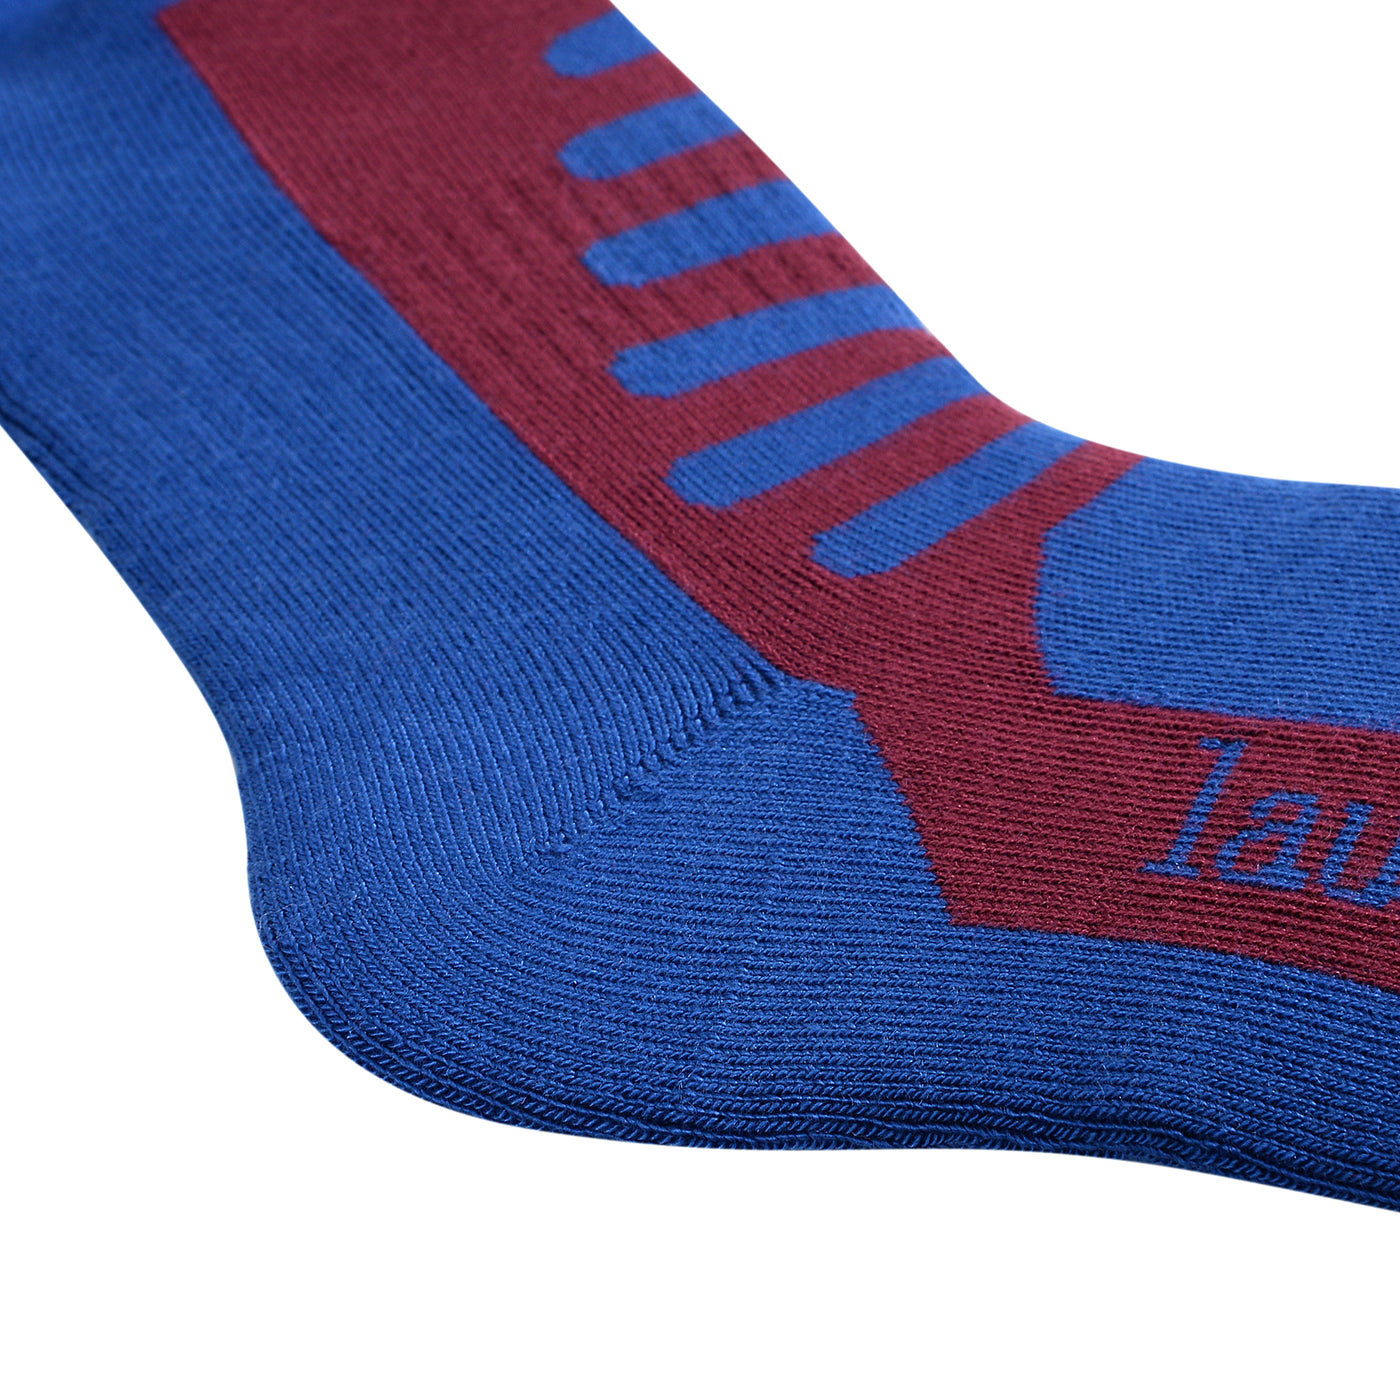 3 Pairs Cashmere-Like Long Hose Thermal Men's Ski Socks, Black, Blue, Burgundy, Gift Set